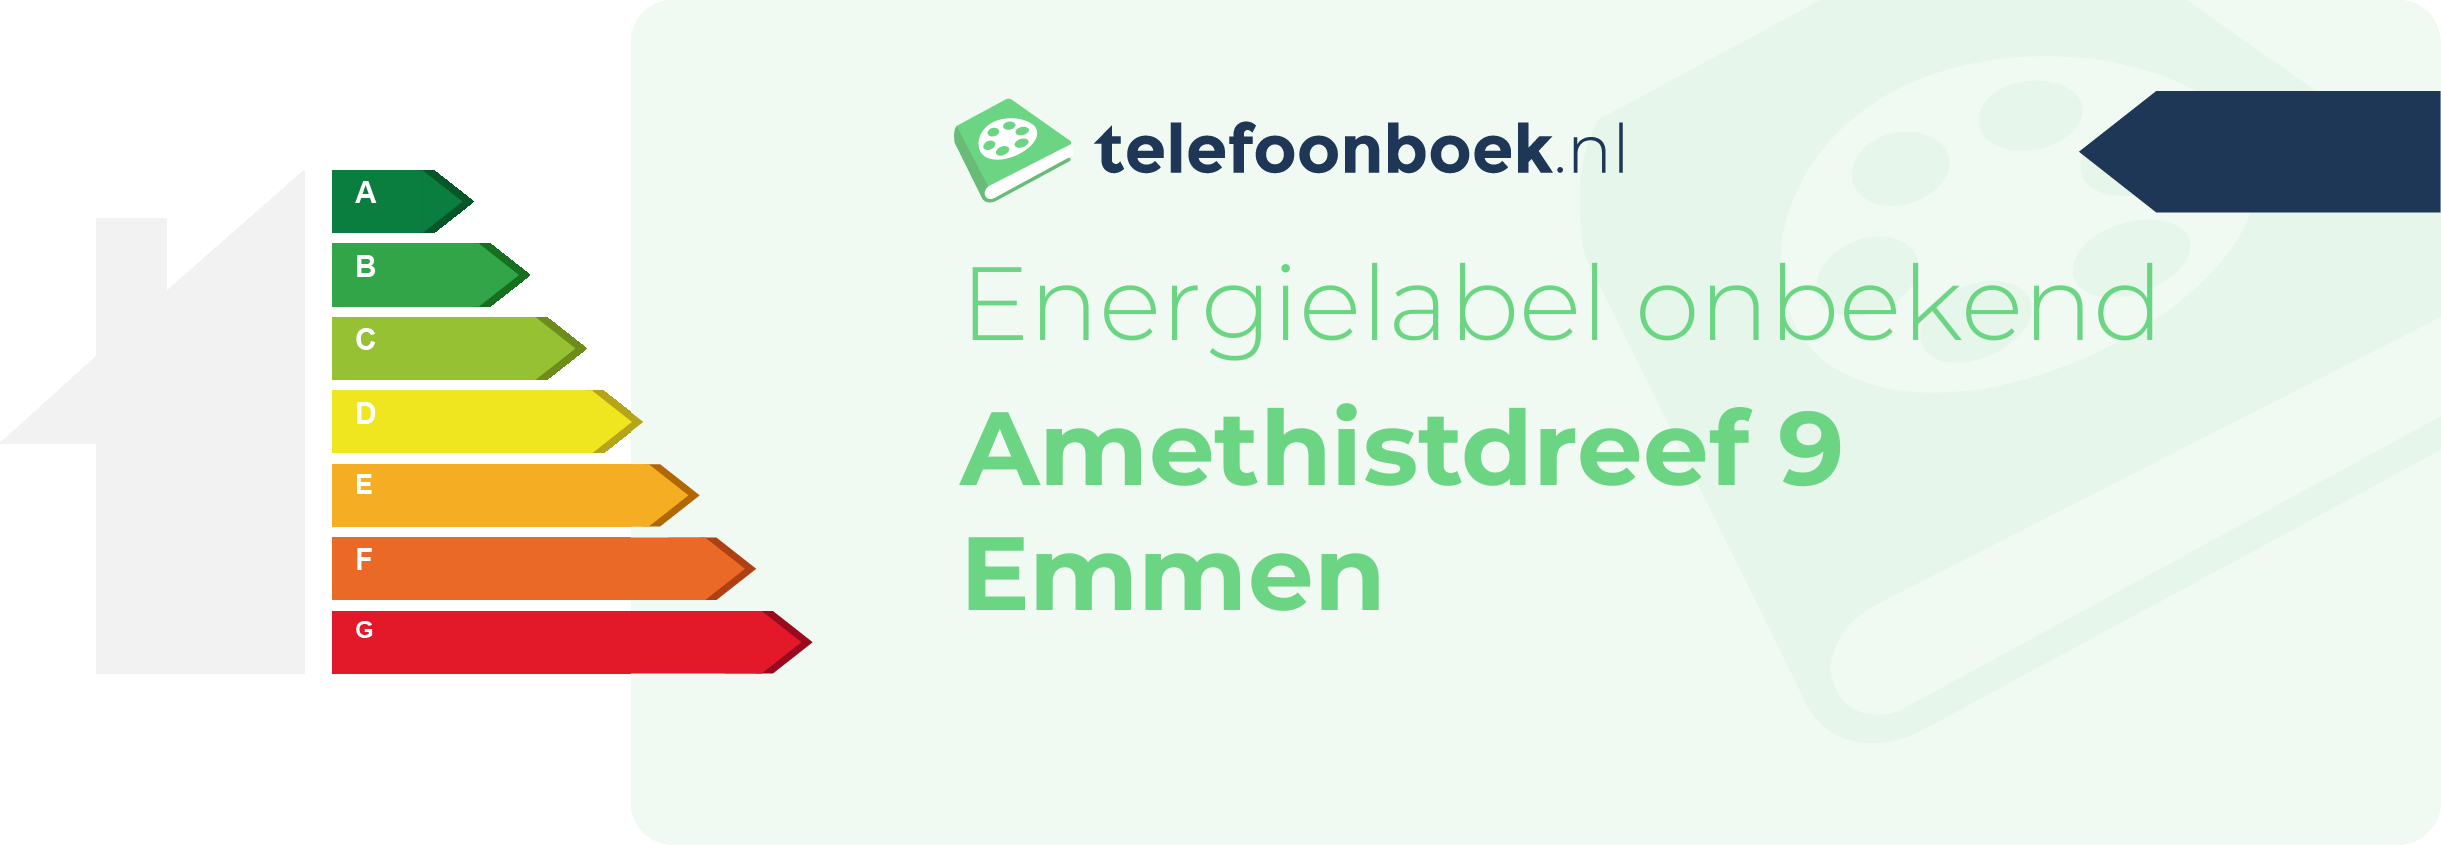 Energielabel Amethistdreef 9 Emmen